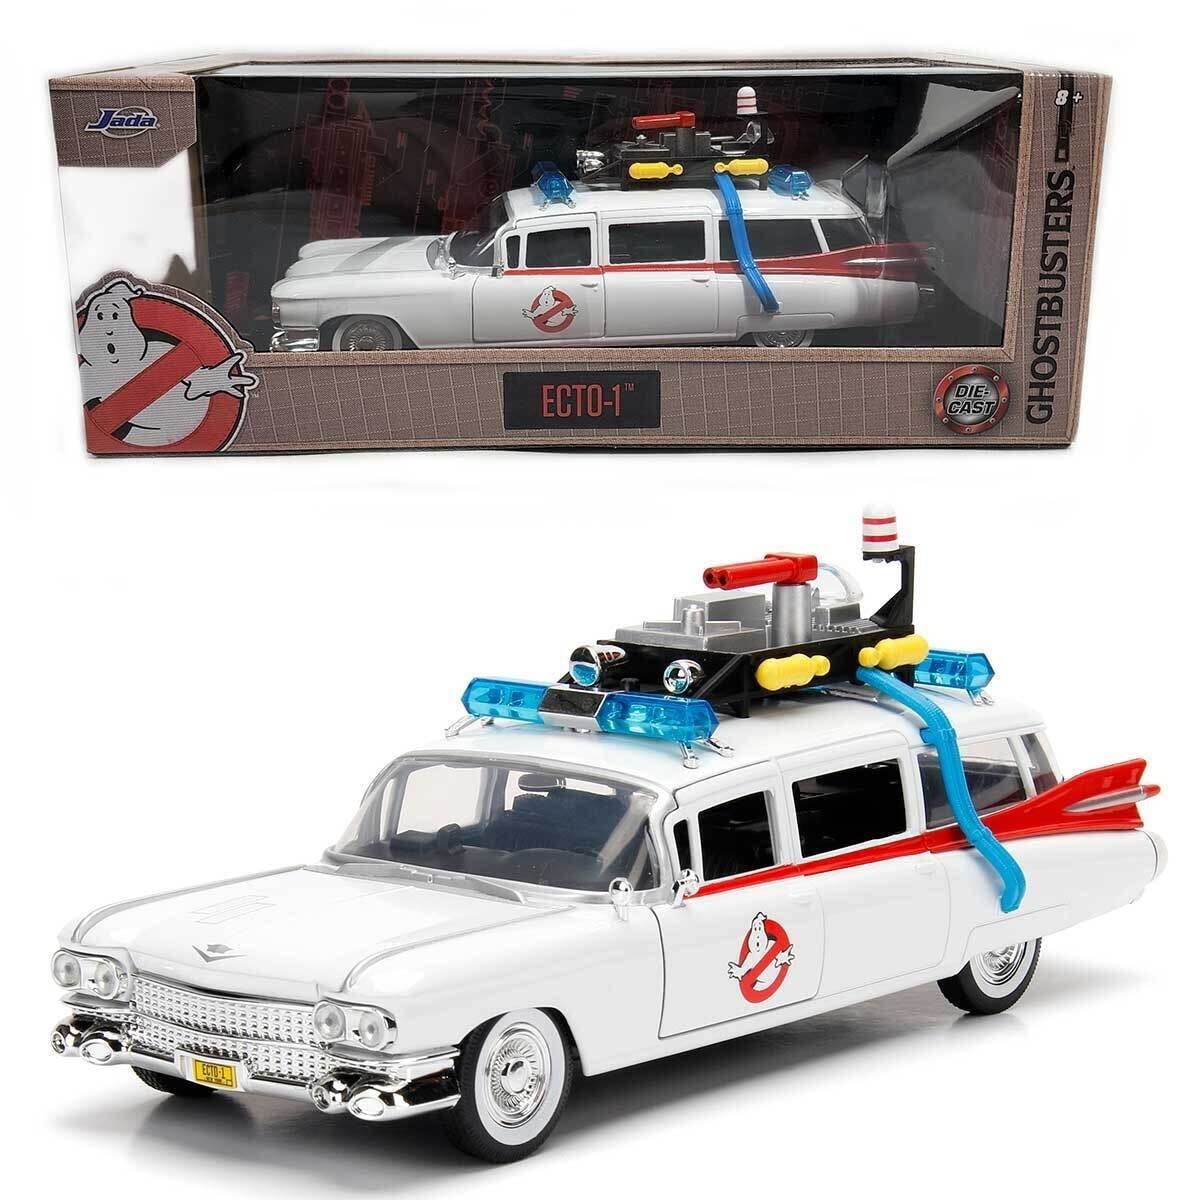 Jada 99731 Toys Hollywood Rides: Ectomobil Ecto-1, Diecast Modellauto Ghostbusters im Maßstab 1/24